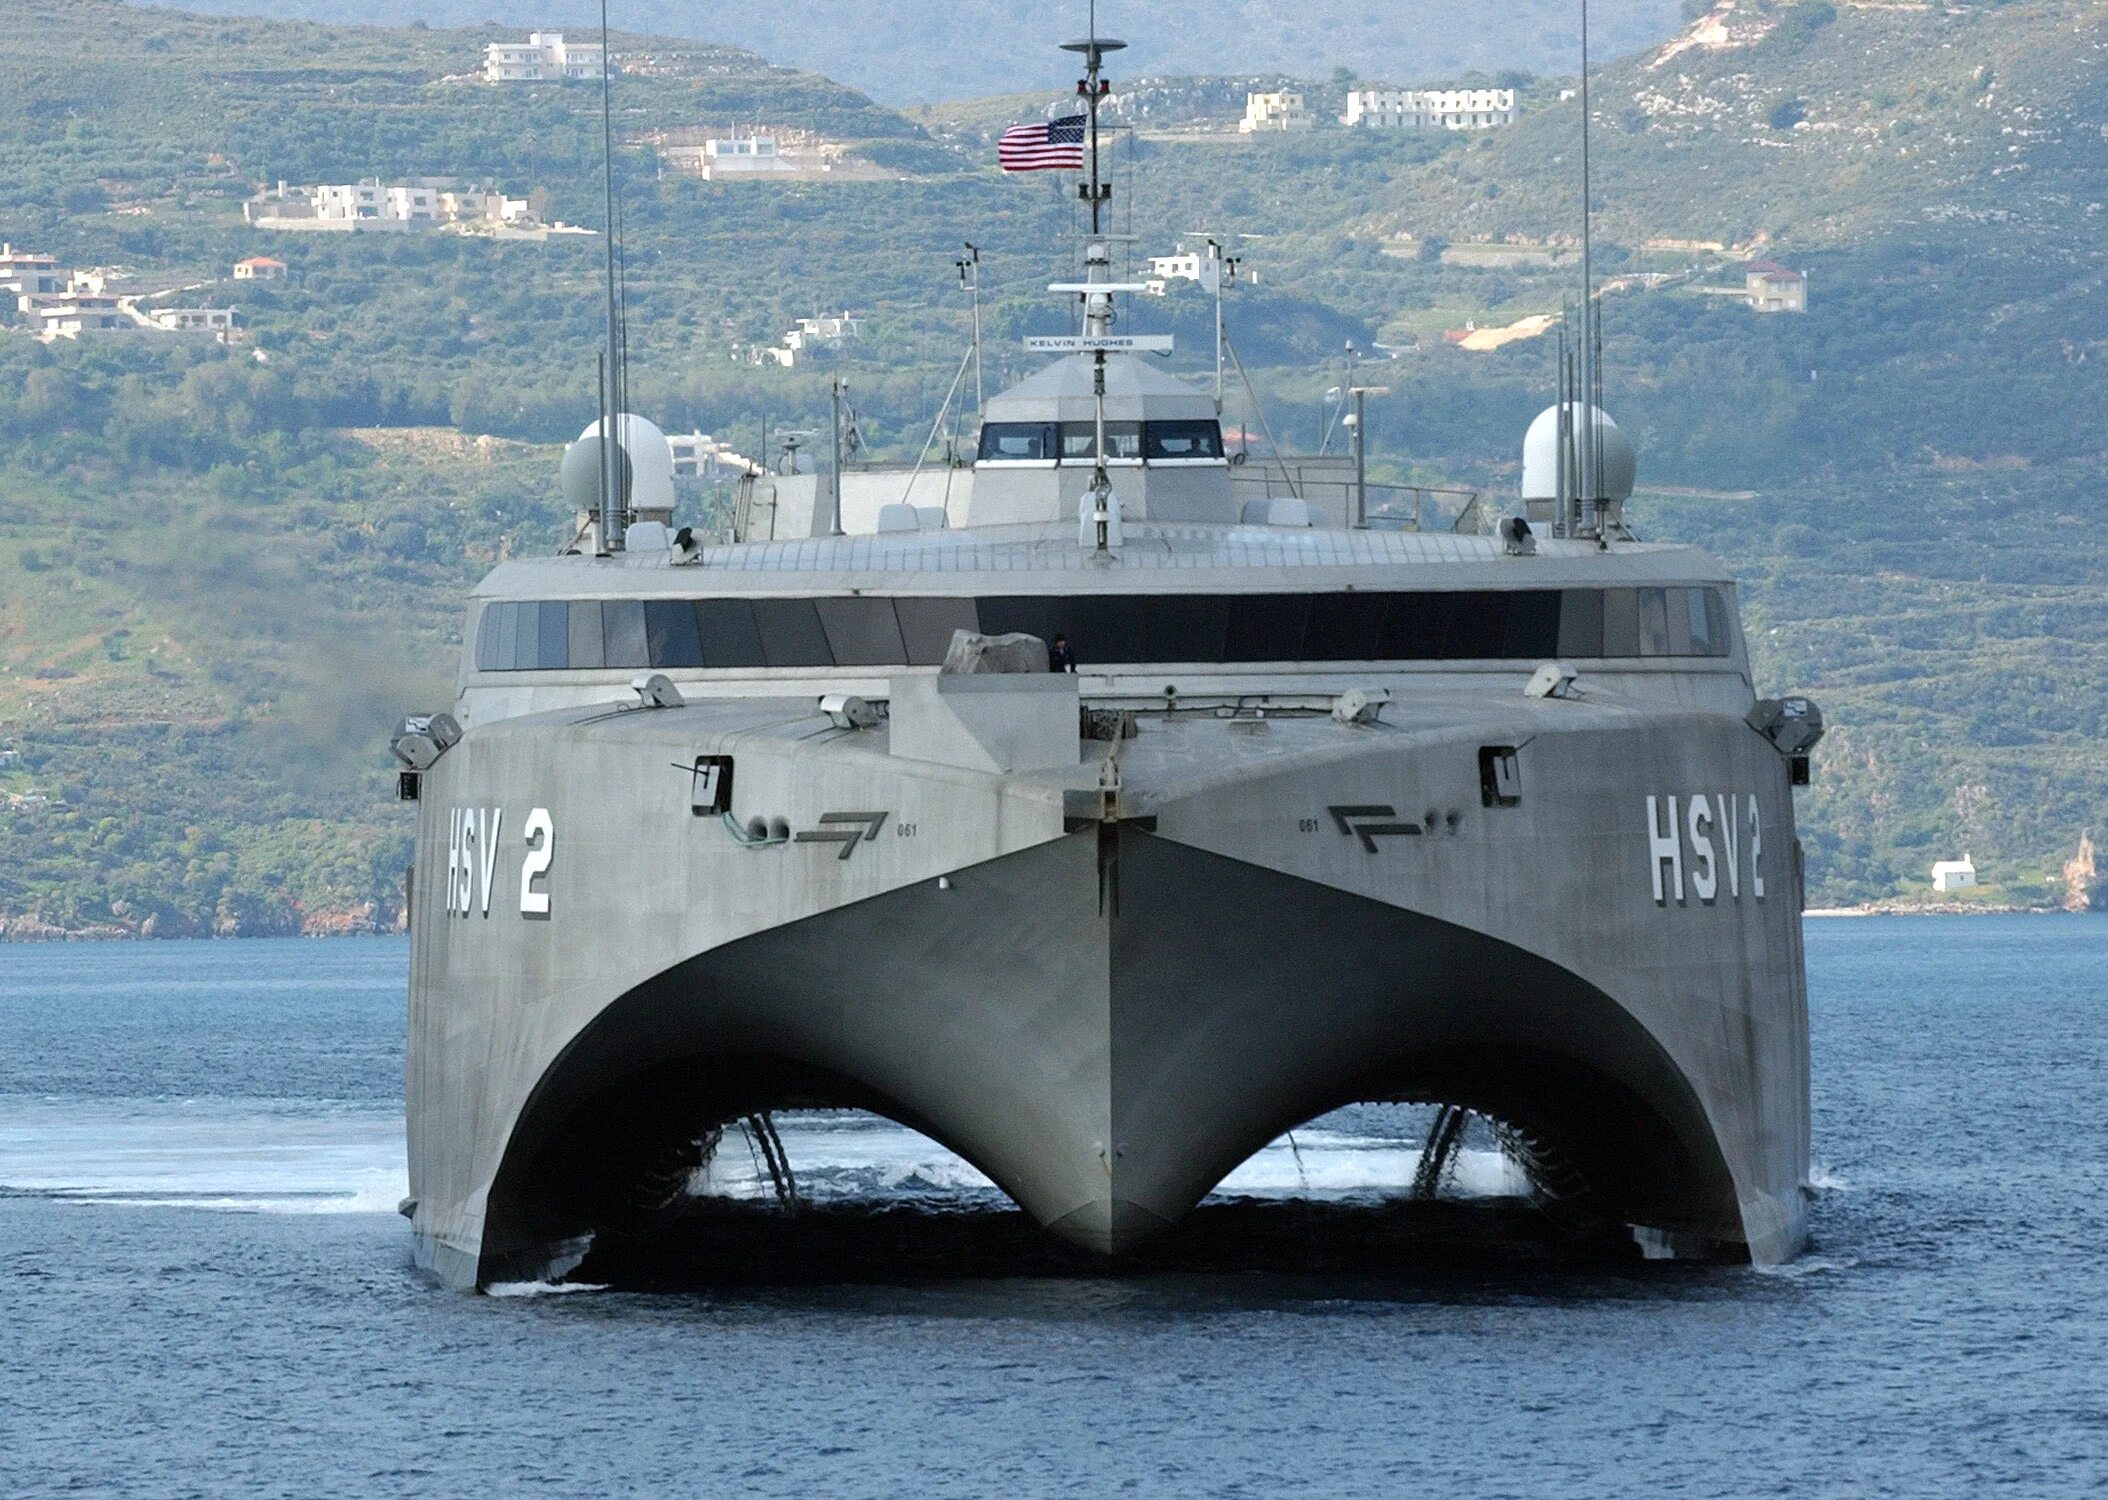 Usa ships. Гибридный катамаран HSV-2 Swift. Военный корабль «HSV 2 Swift». Военные корабли катамараны ВМС США. Корабль - платформа ВМС США.